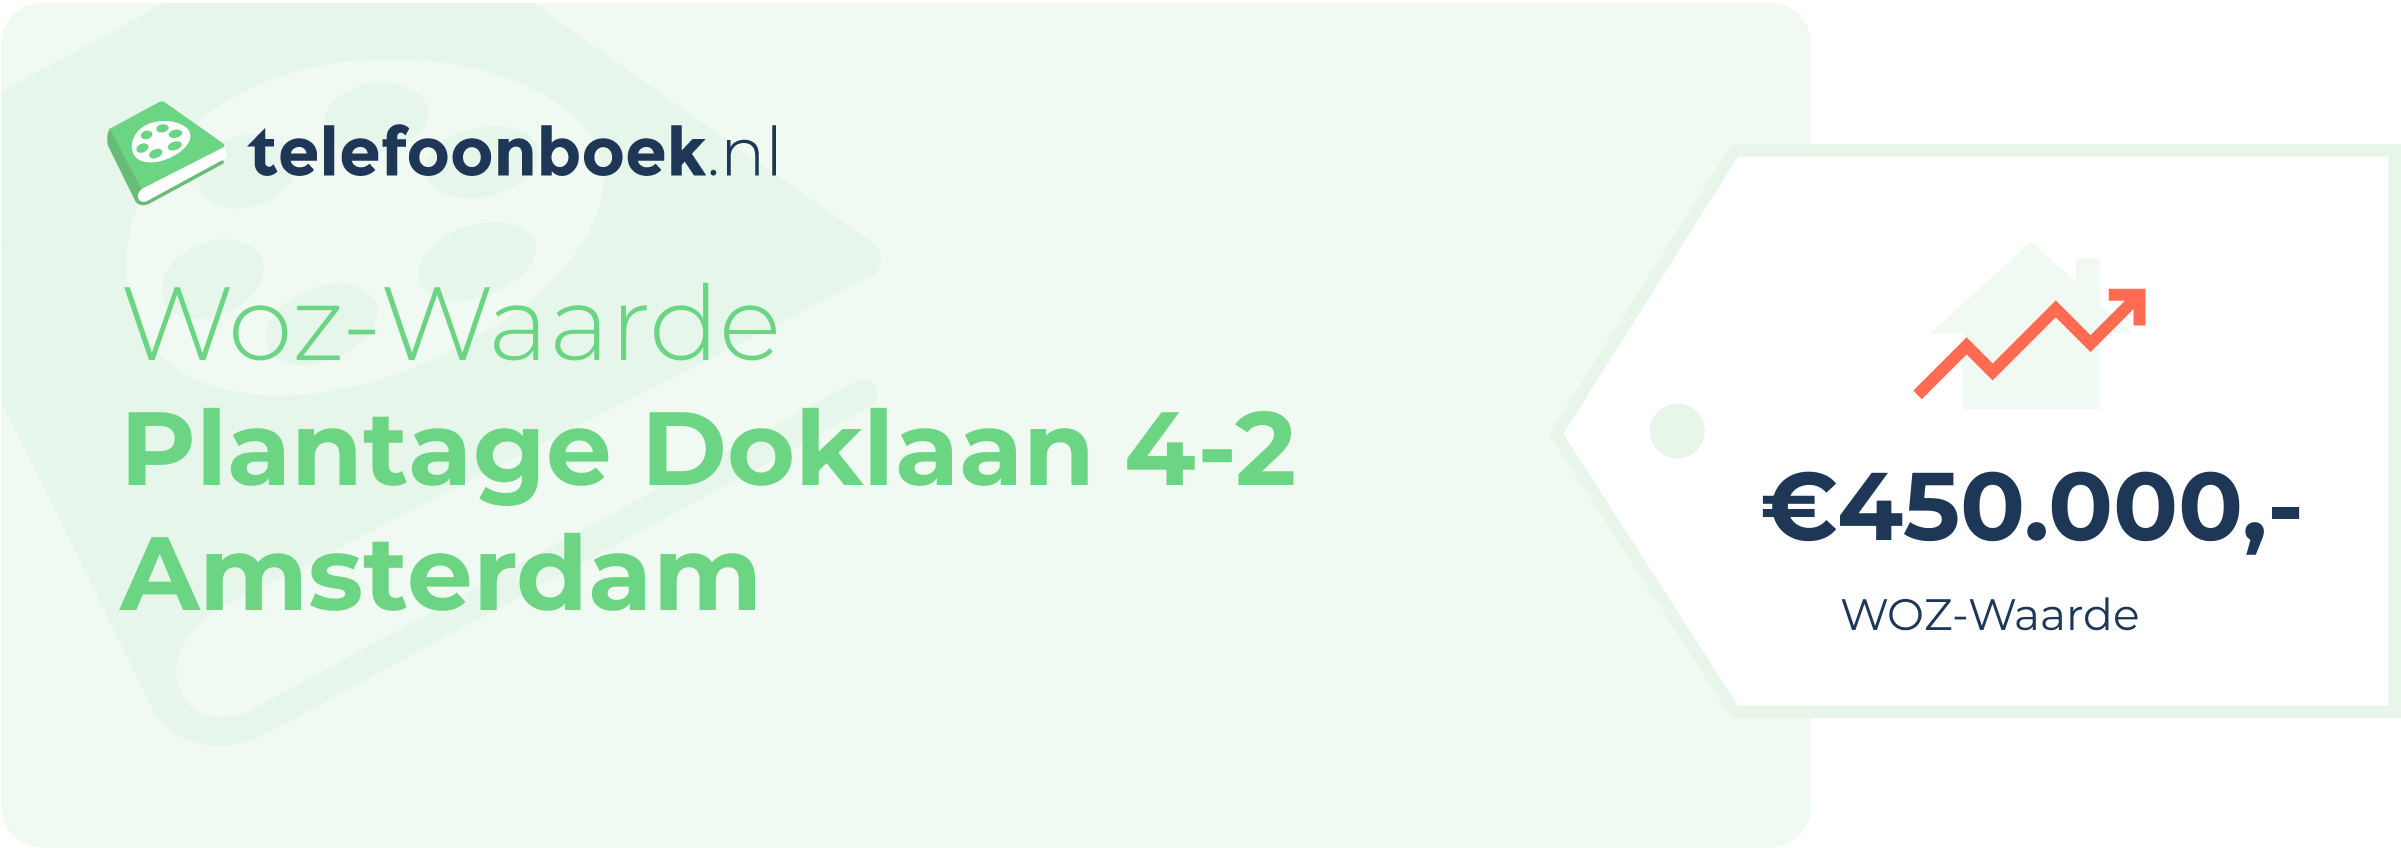 WOZ-waarde Plantage Doklaan 4-2 Amsterdam